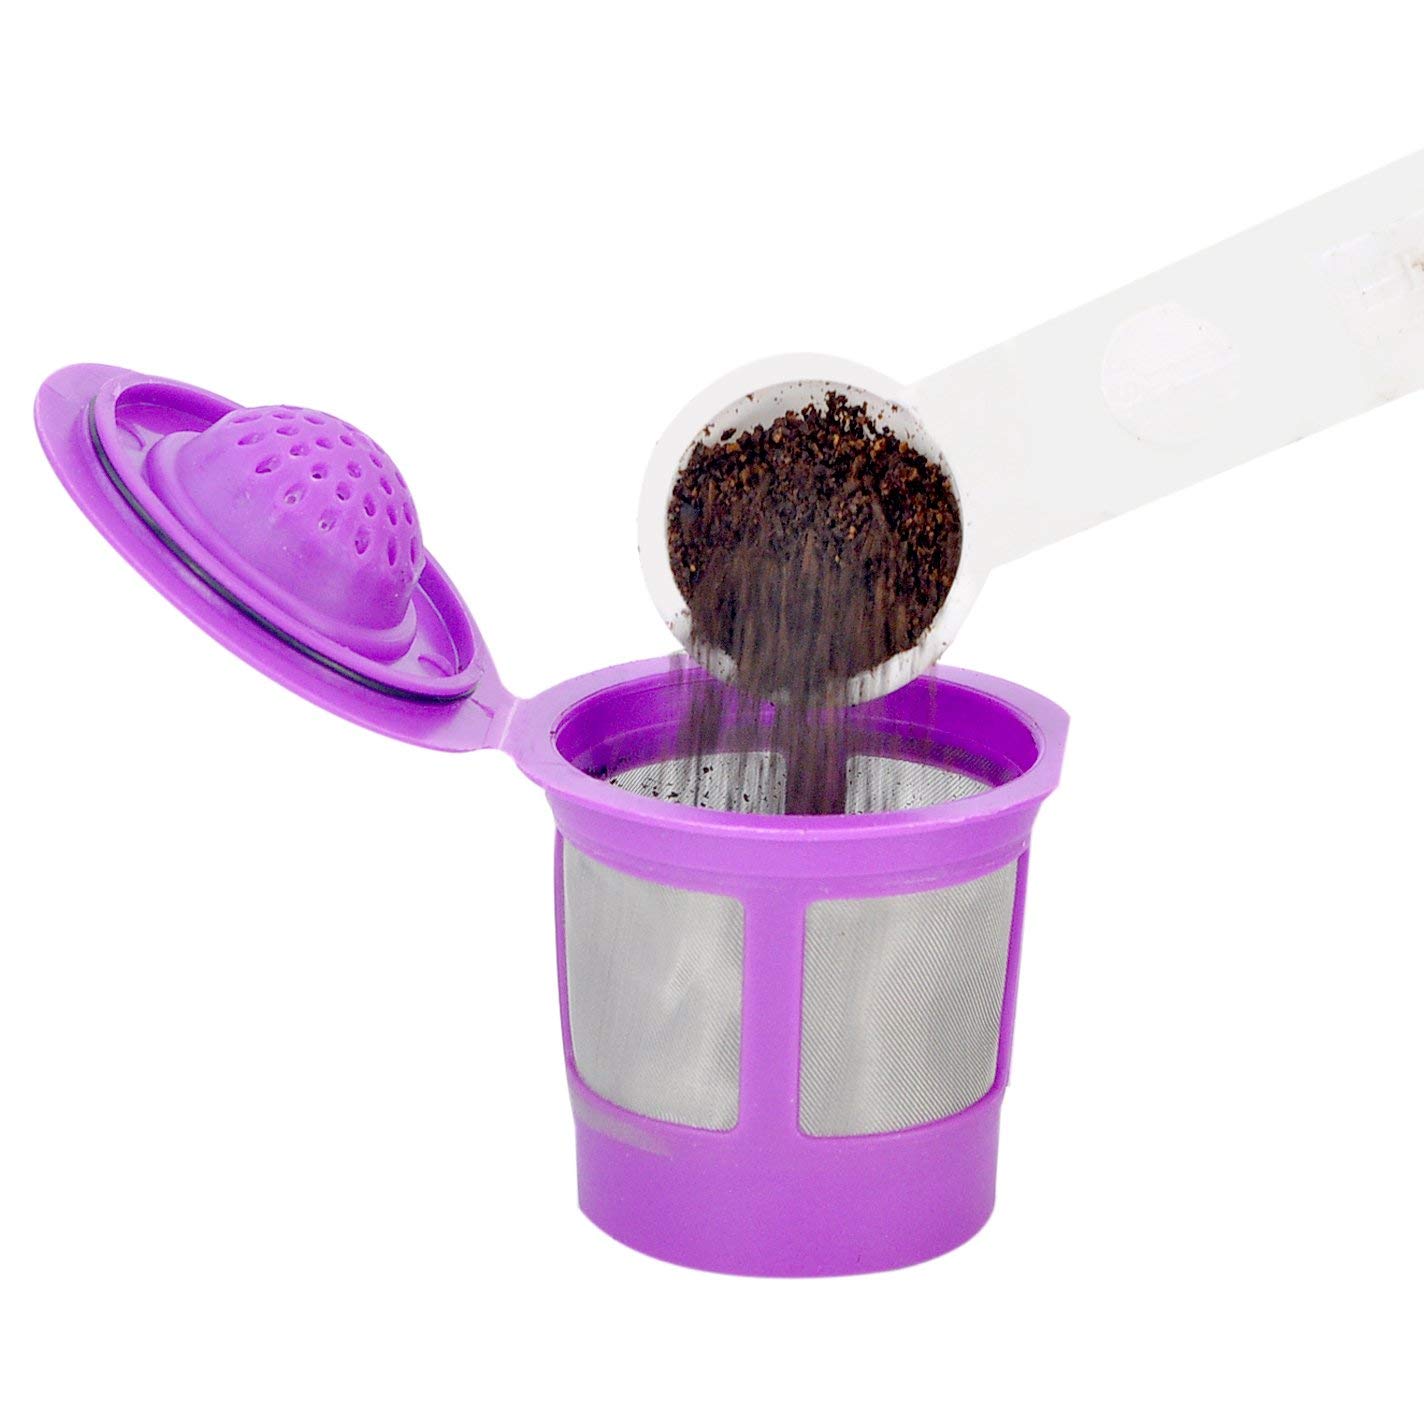 Reusable K Cups for Keurig 2.0  1.0 - Pack of 2 (Purple) - Easy to Clean - Universal Keurig Reusable Coffee Pods by Delibru